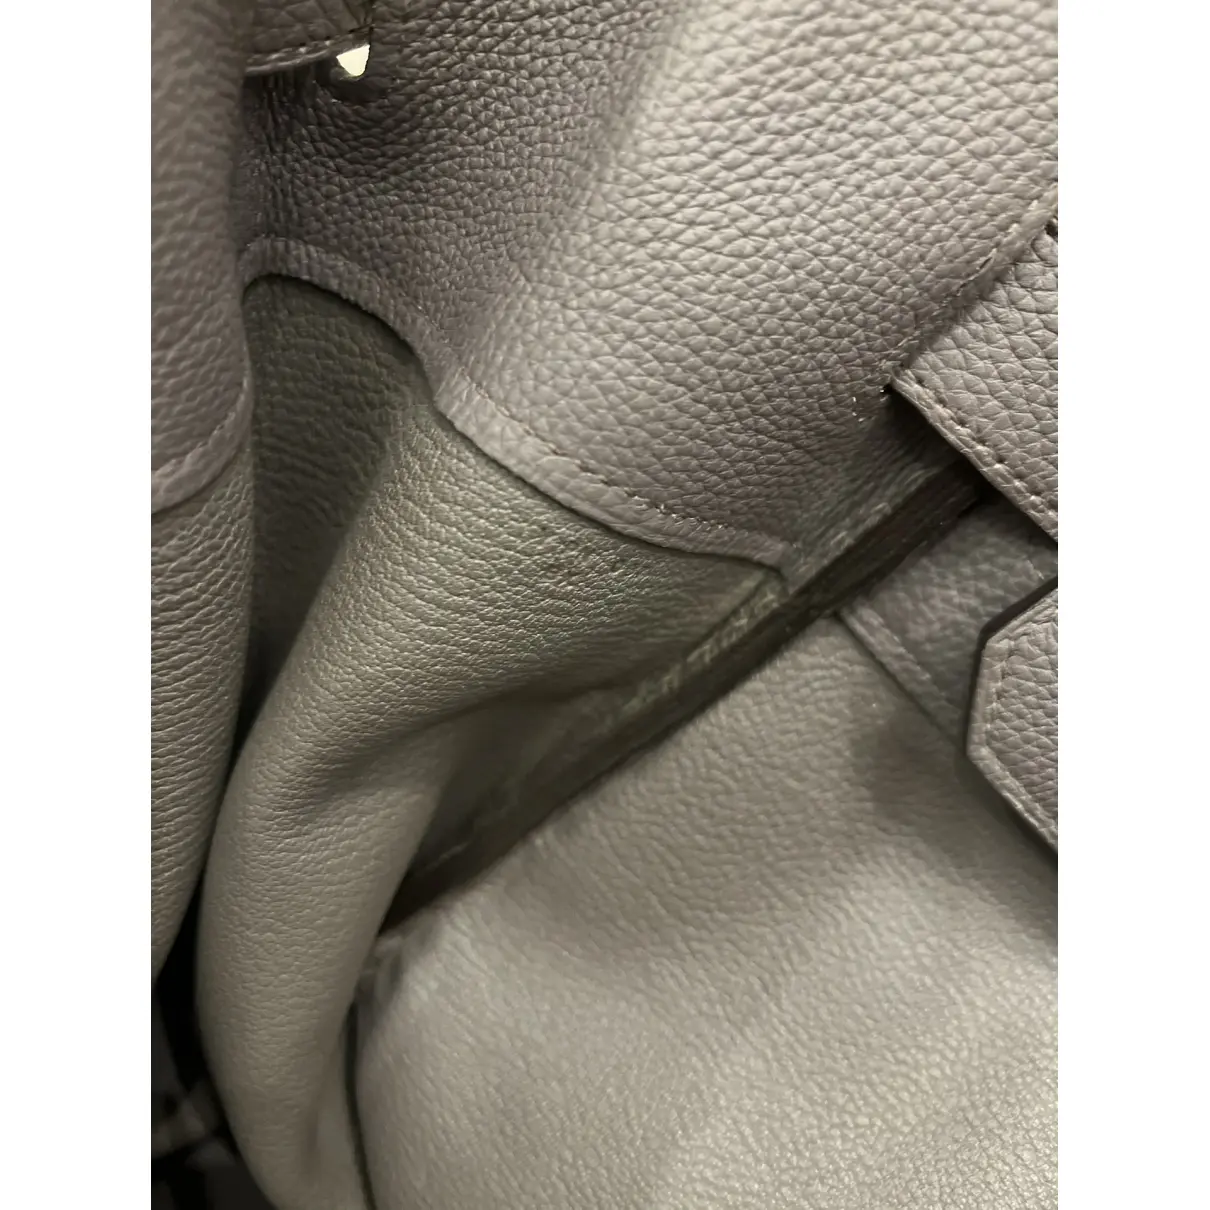 Buy Hermès Birkin 50 leather handbag online